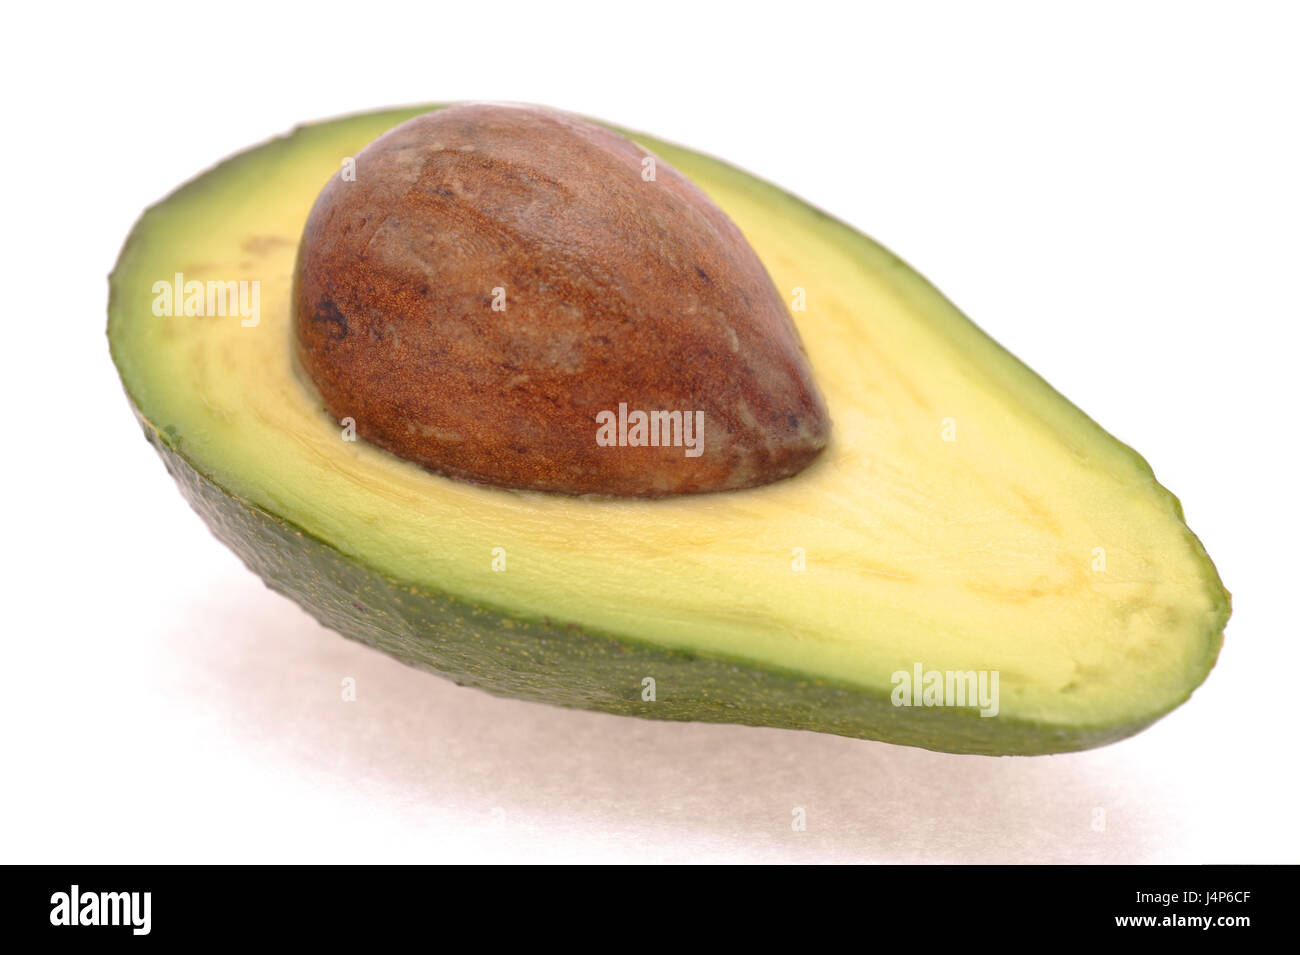 Avocado half, core, Persea americana, Stock Photo